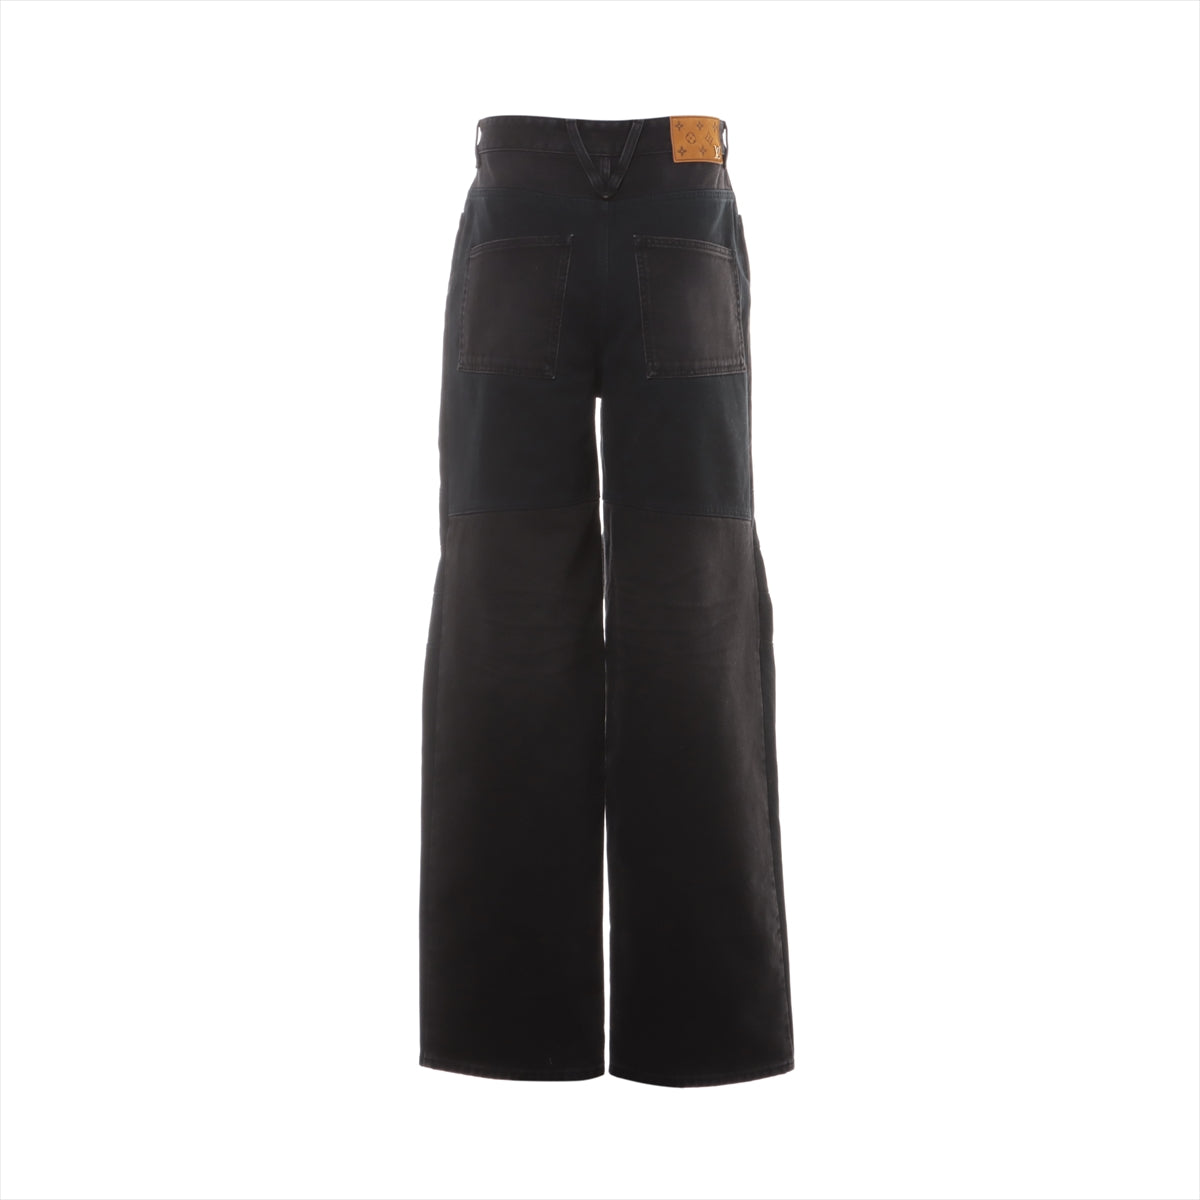 Louis Vuitton 24SS Cotton & Polyester Denim pants 29 Men's Black x Gray  RM241M denim workwear pants Monogram